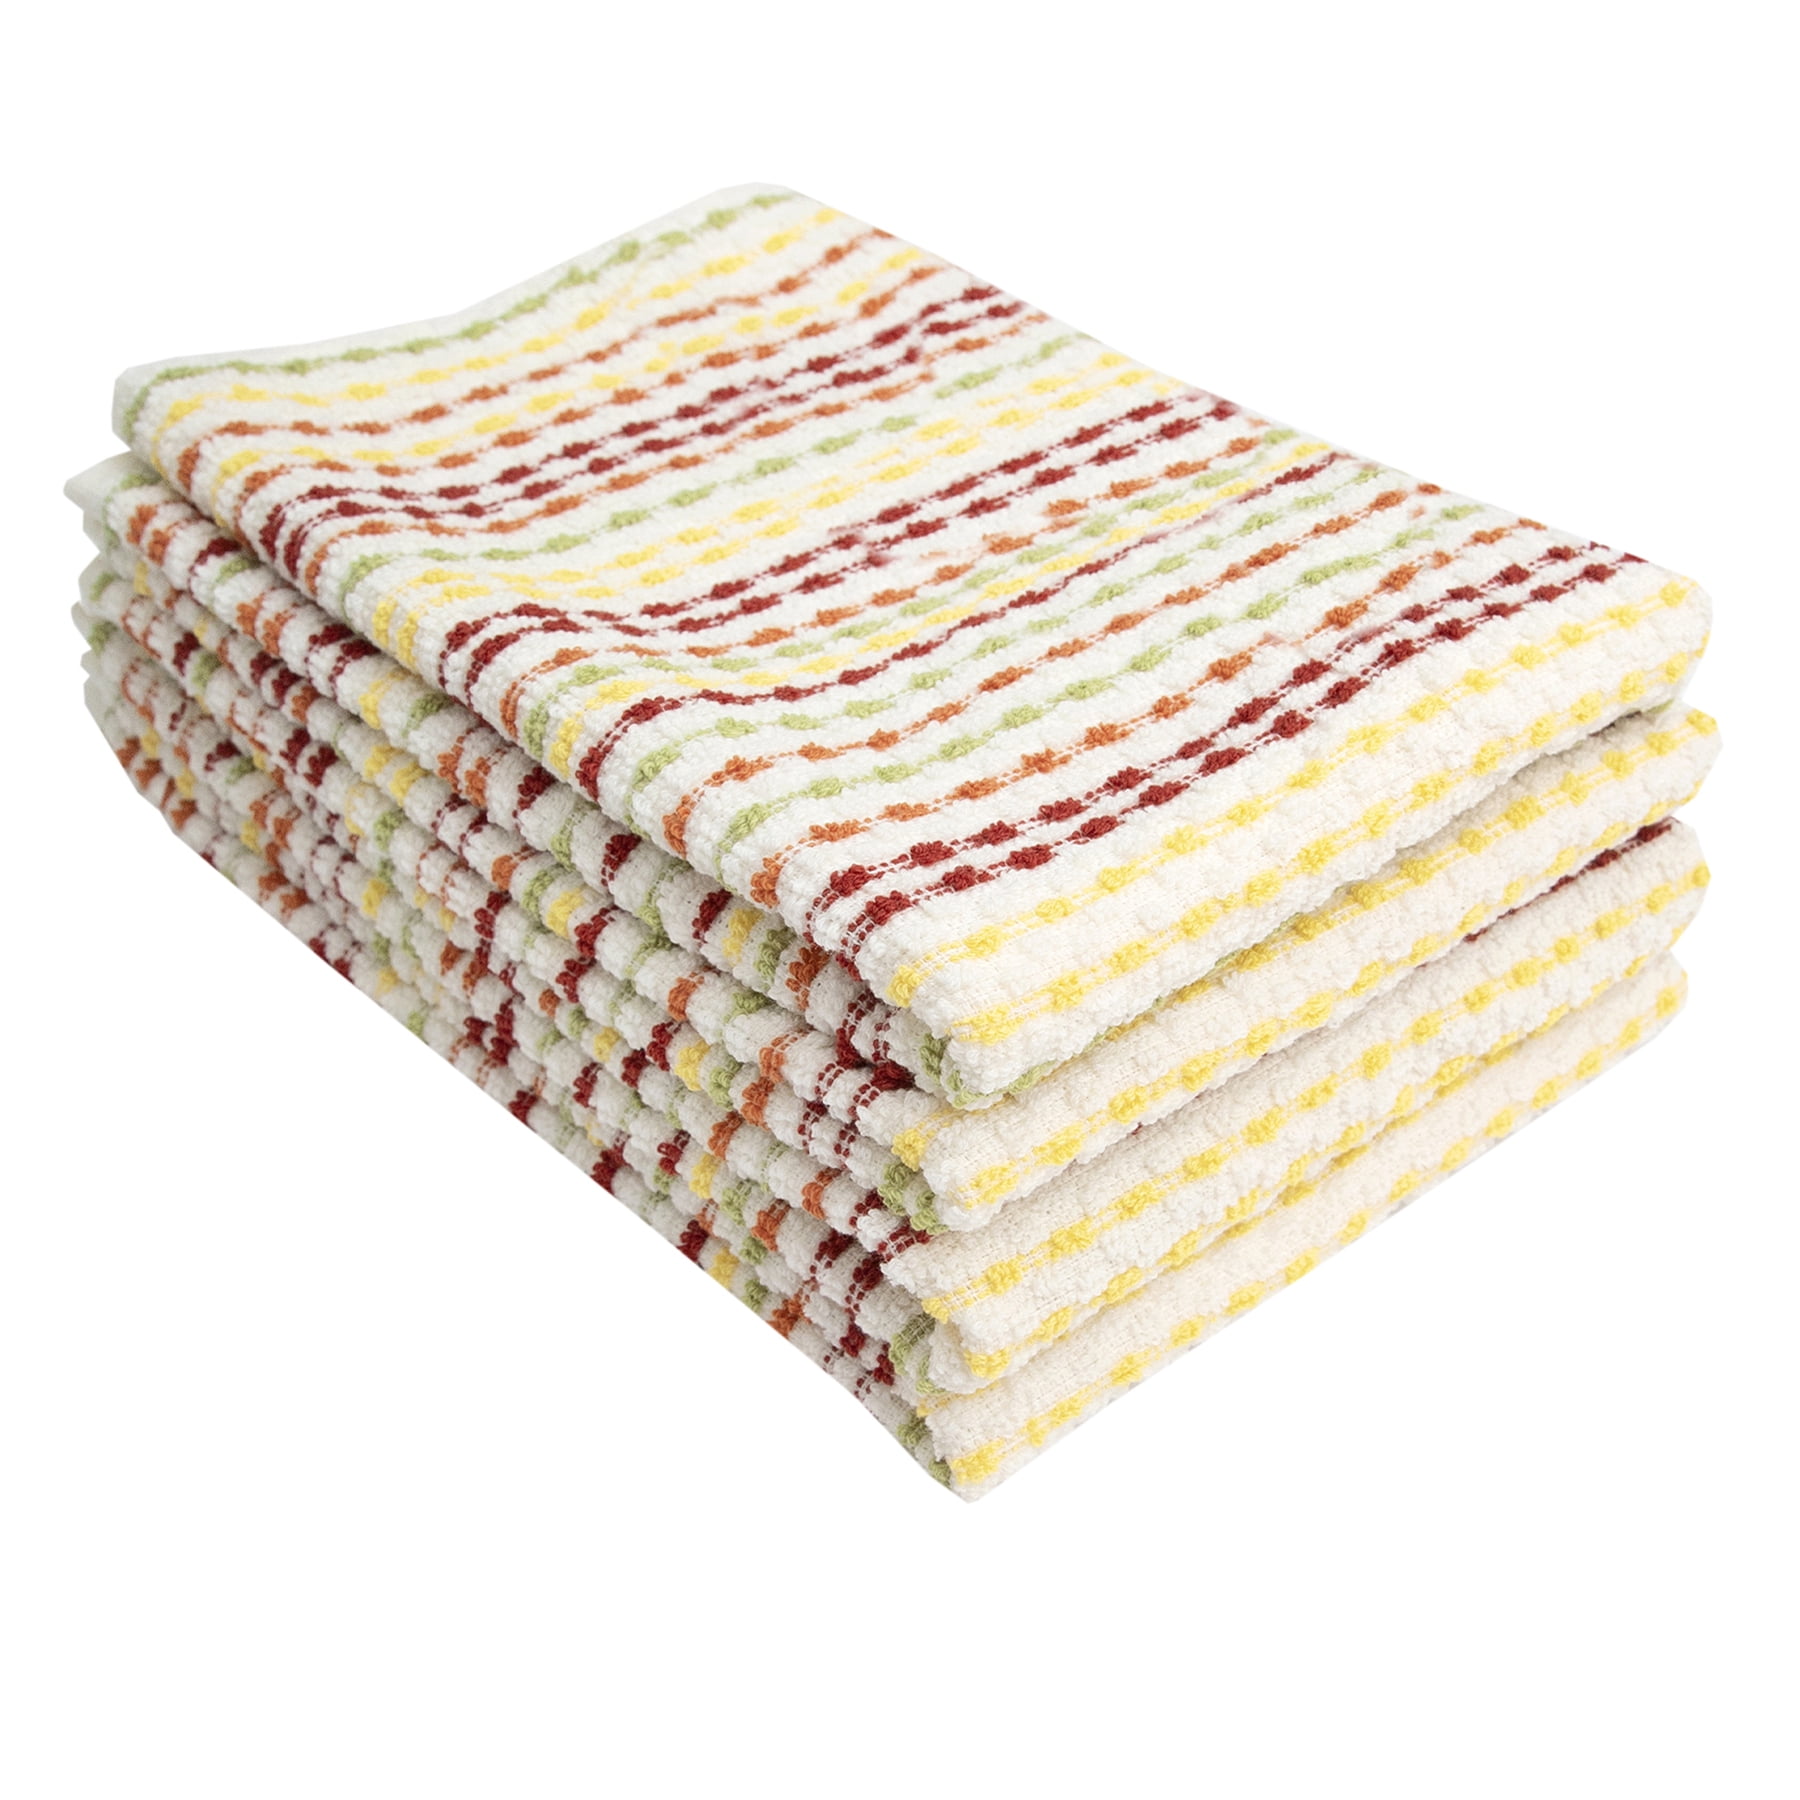 Mainstays 4-Pack 16”x26” Woven Kitchen Towel Set, Rich Black 